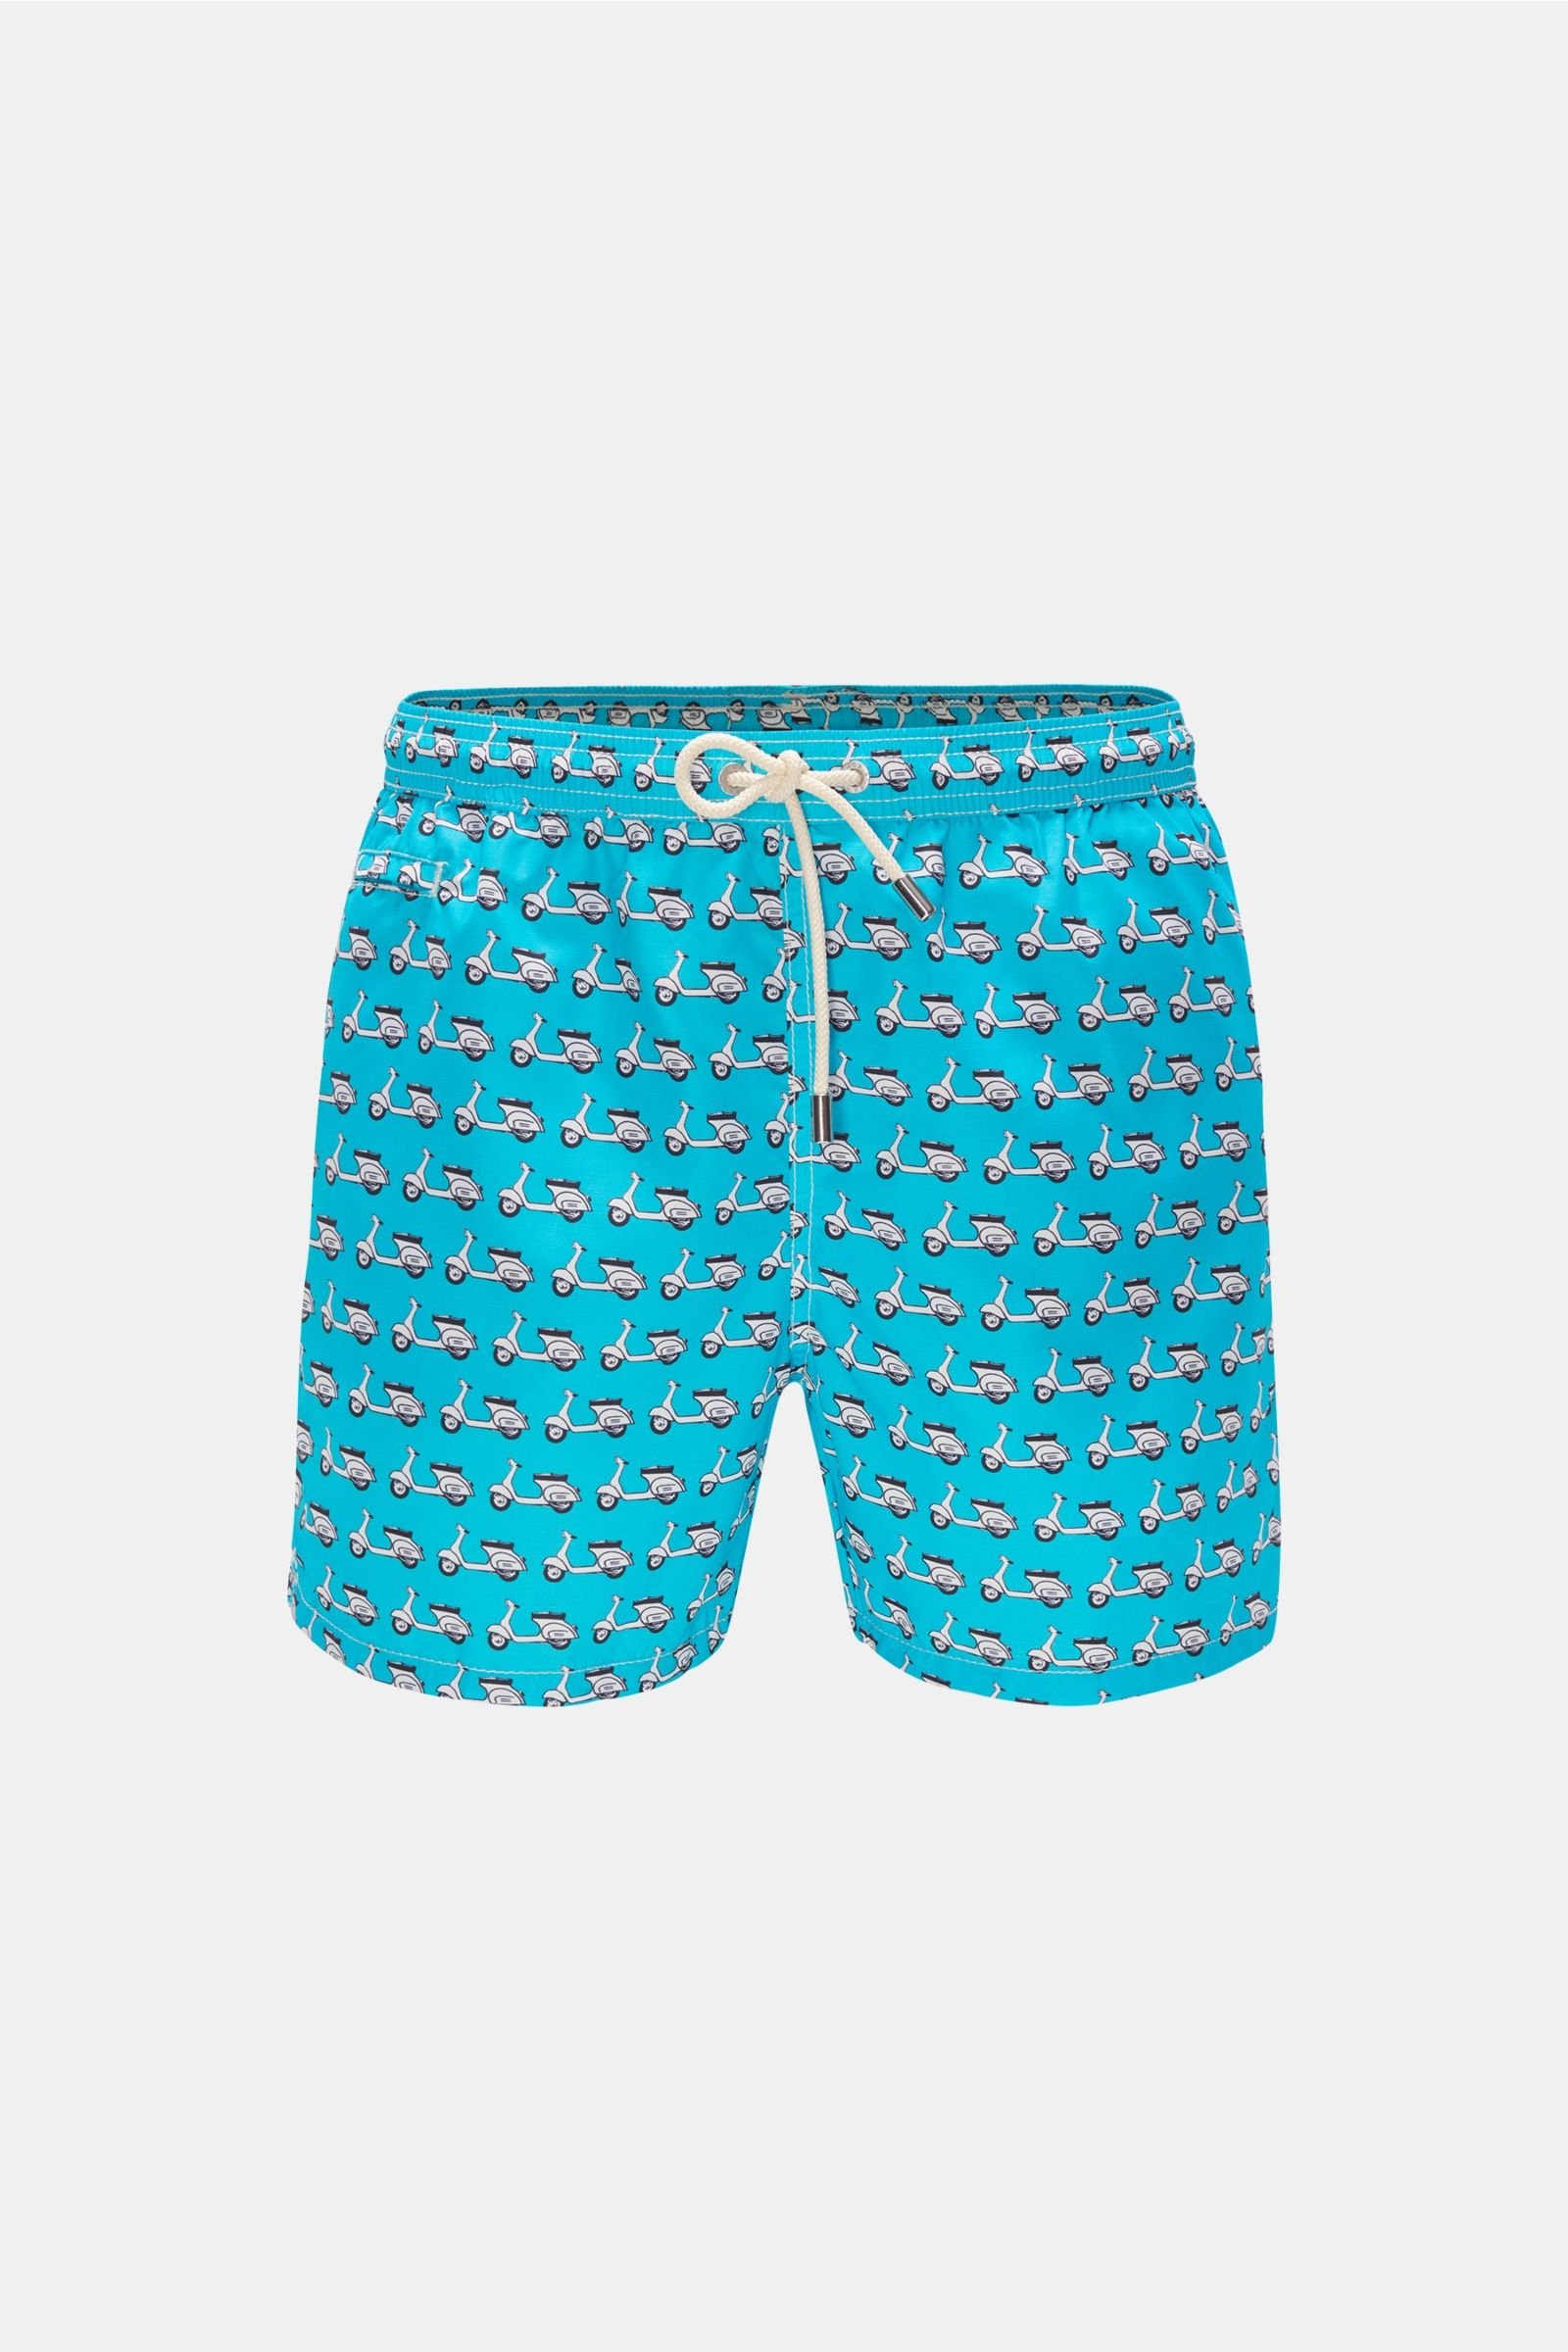 Swim shorts 'Mini Vespa' turquoise/white patterned